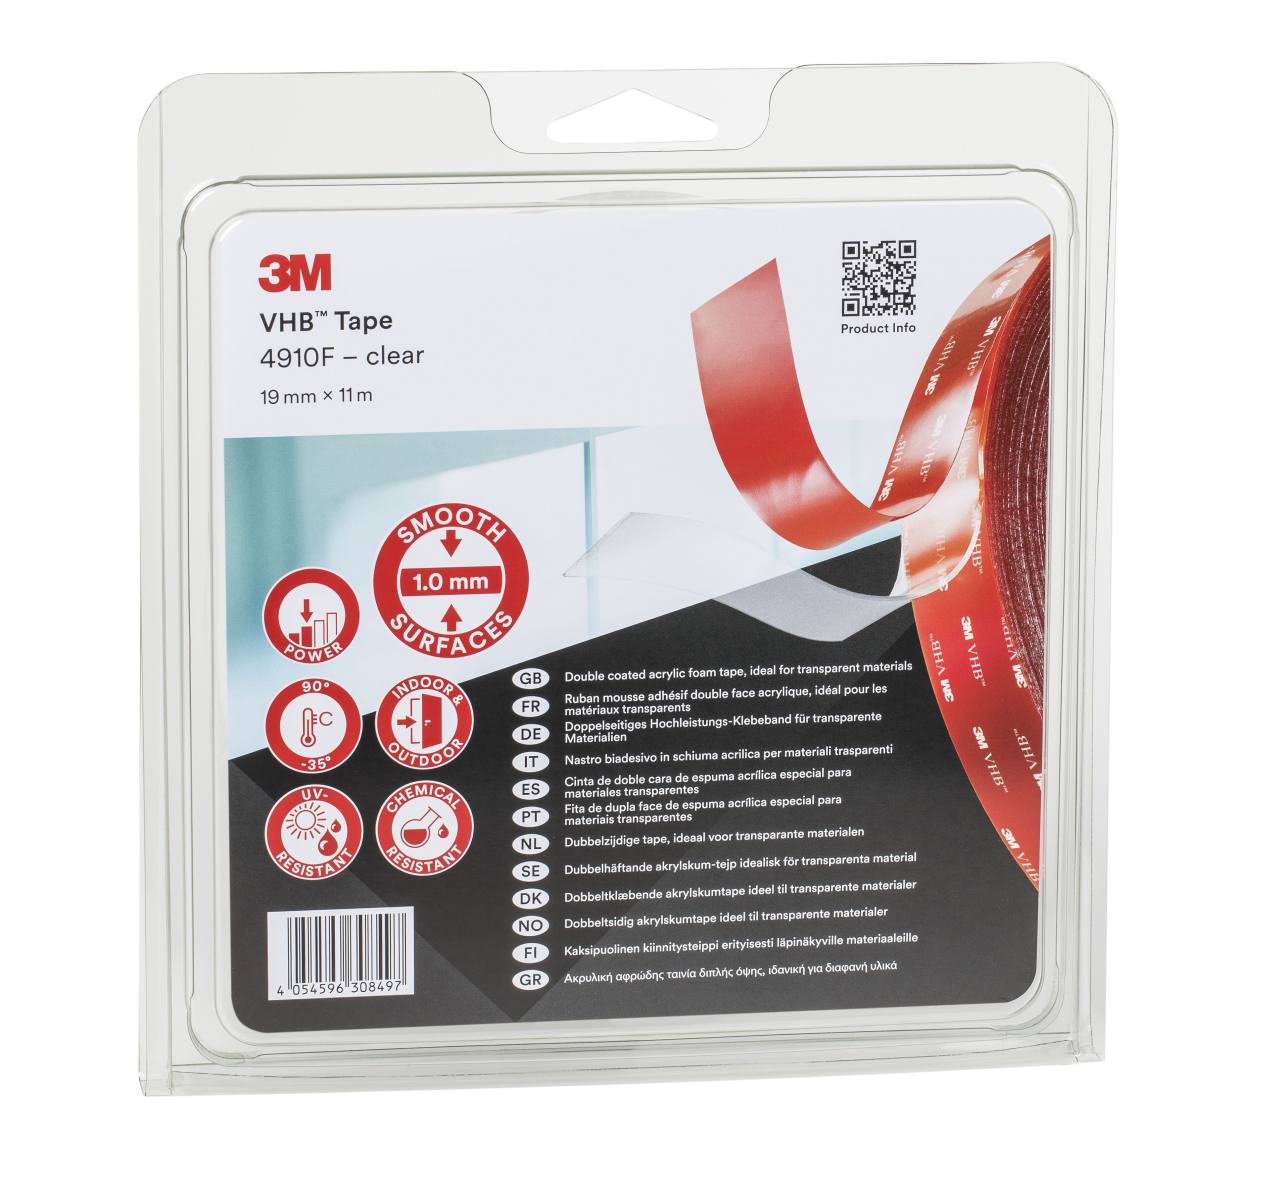 3M VHB Adhesive tape 4910F, transparent, 19 mm x 11 m, 1 mm, blister pack